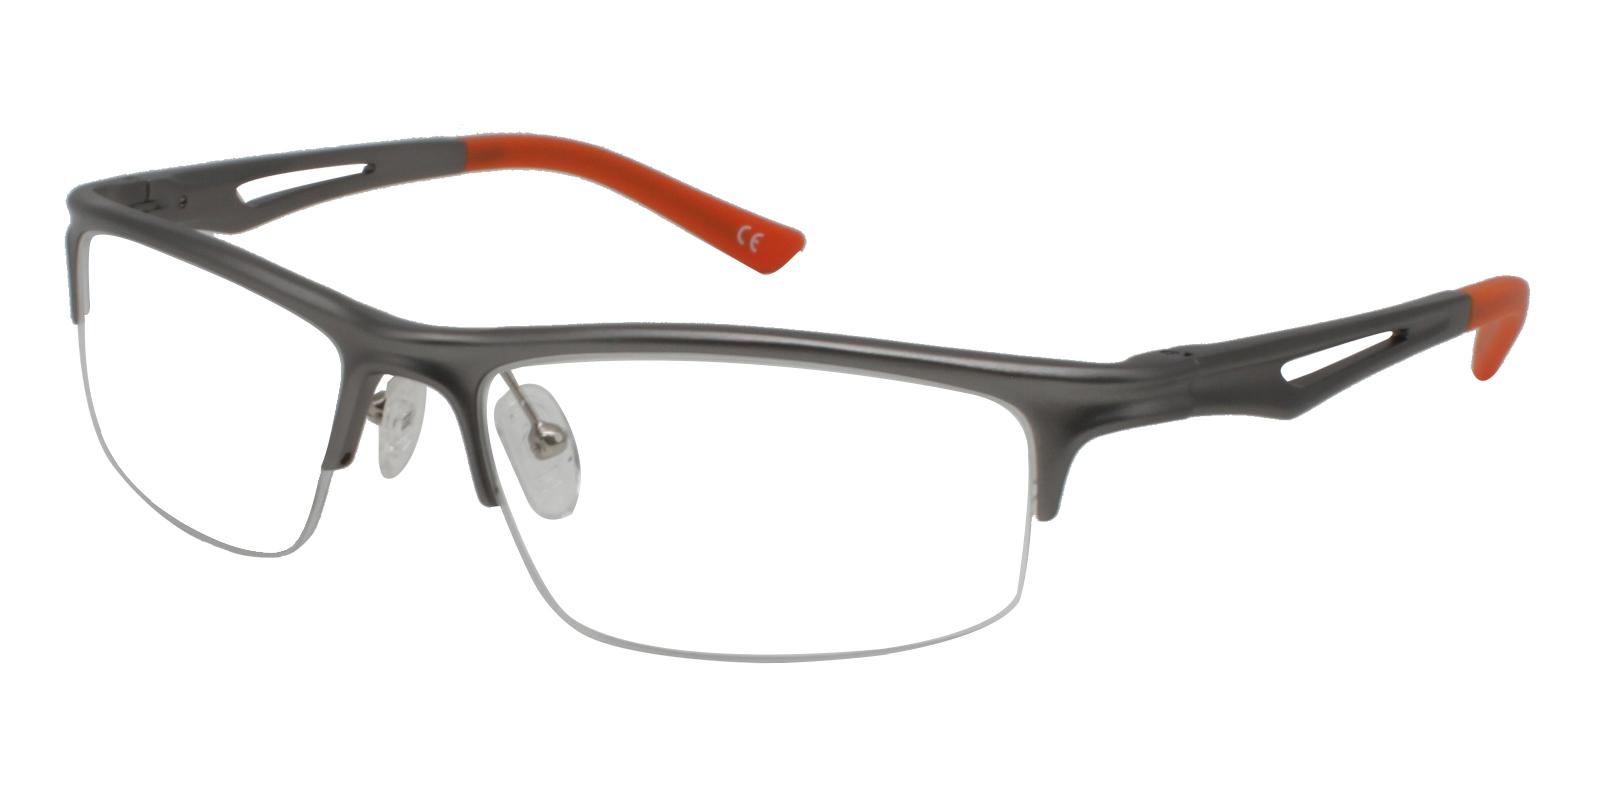 Mariner Gun Metal Eyeglasses , NosePads , SpringHinges Frames from ABBE Glasses